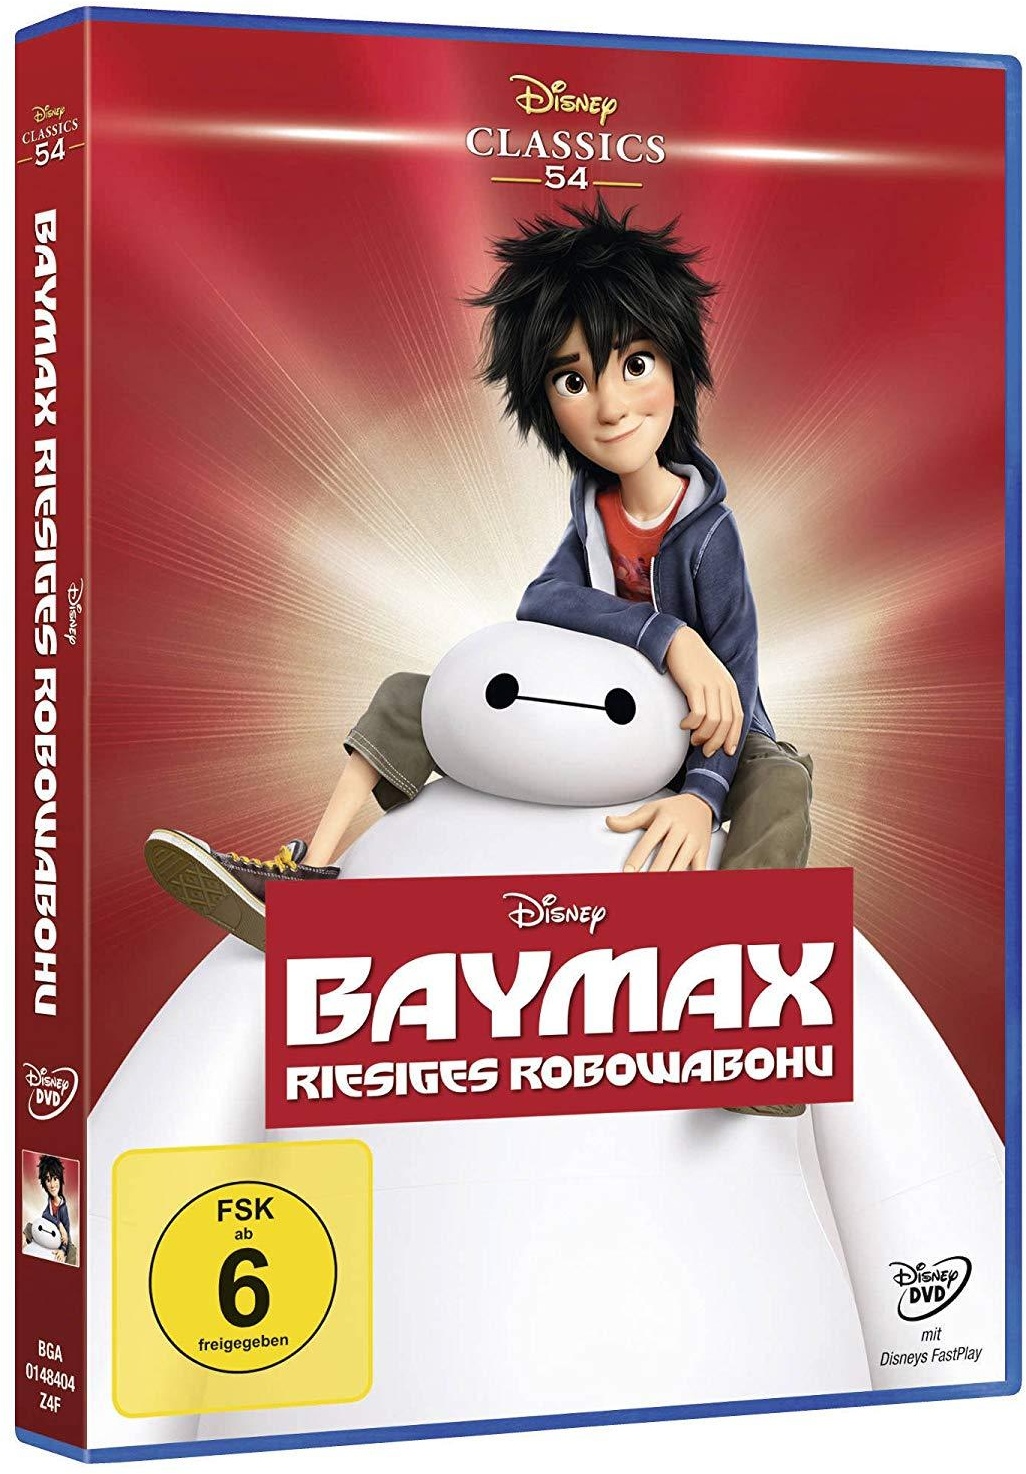 Baymax - Riesiges Robowabohu (DVD)